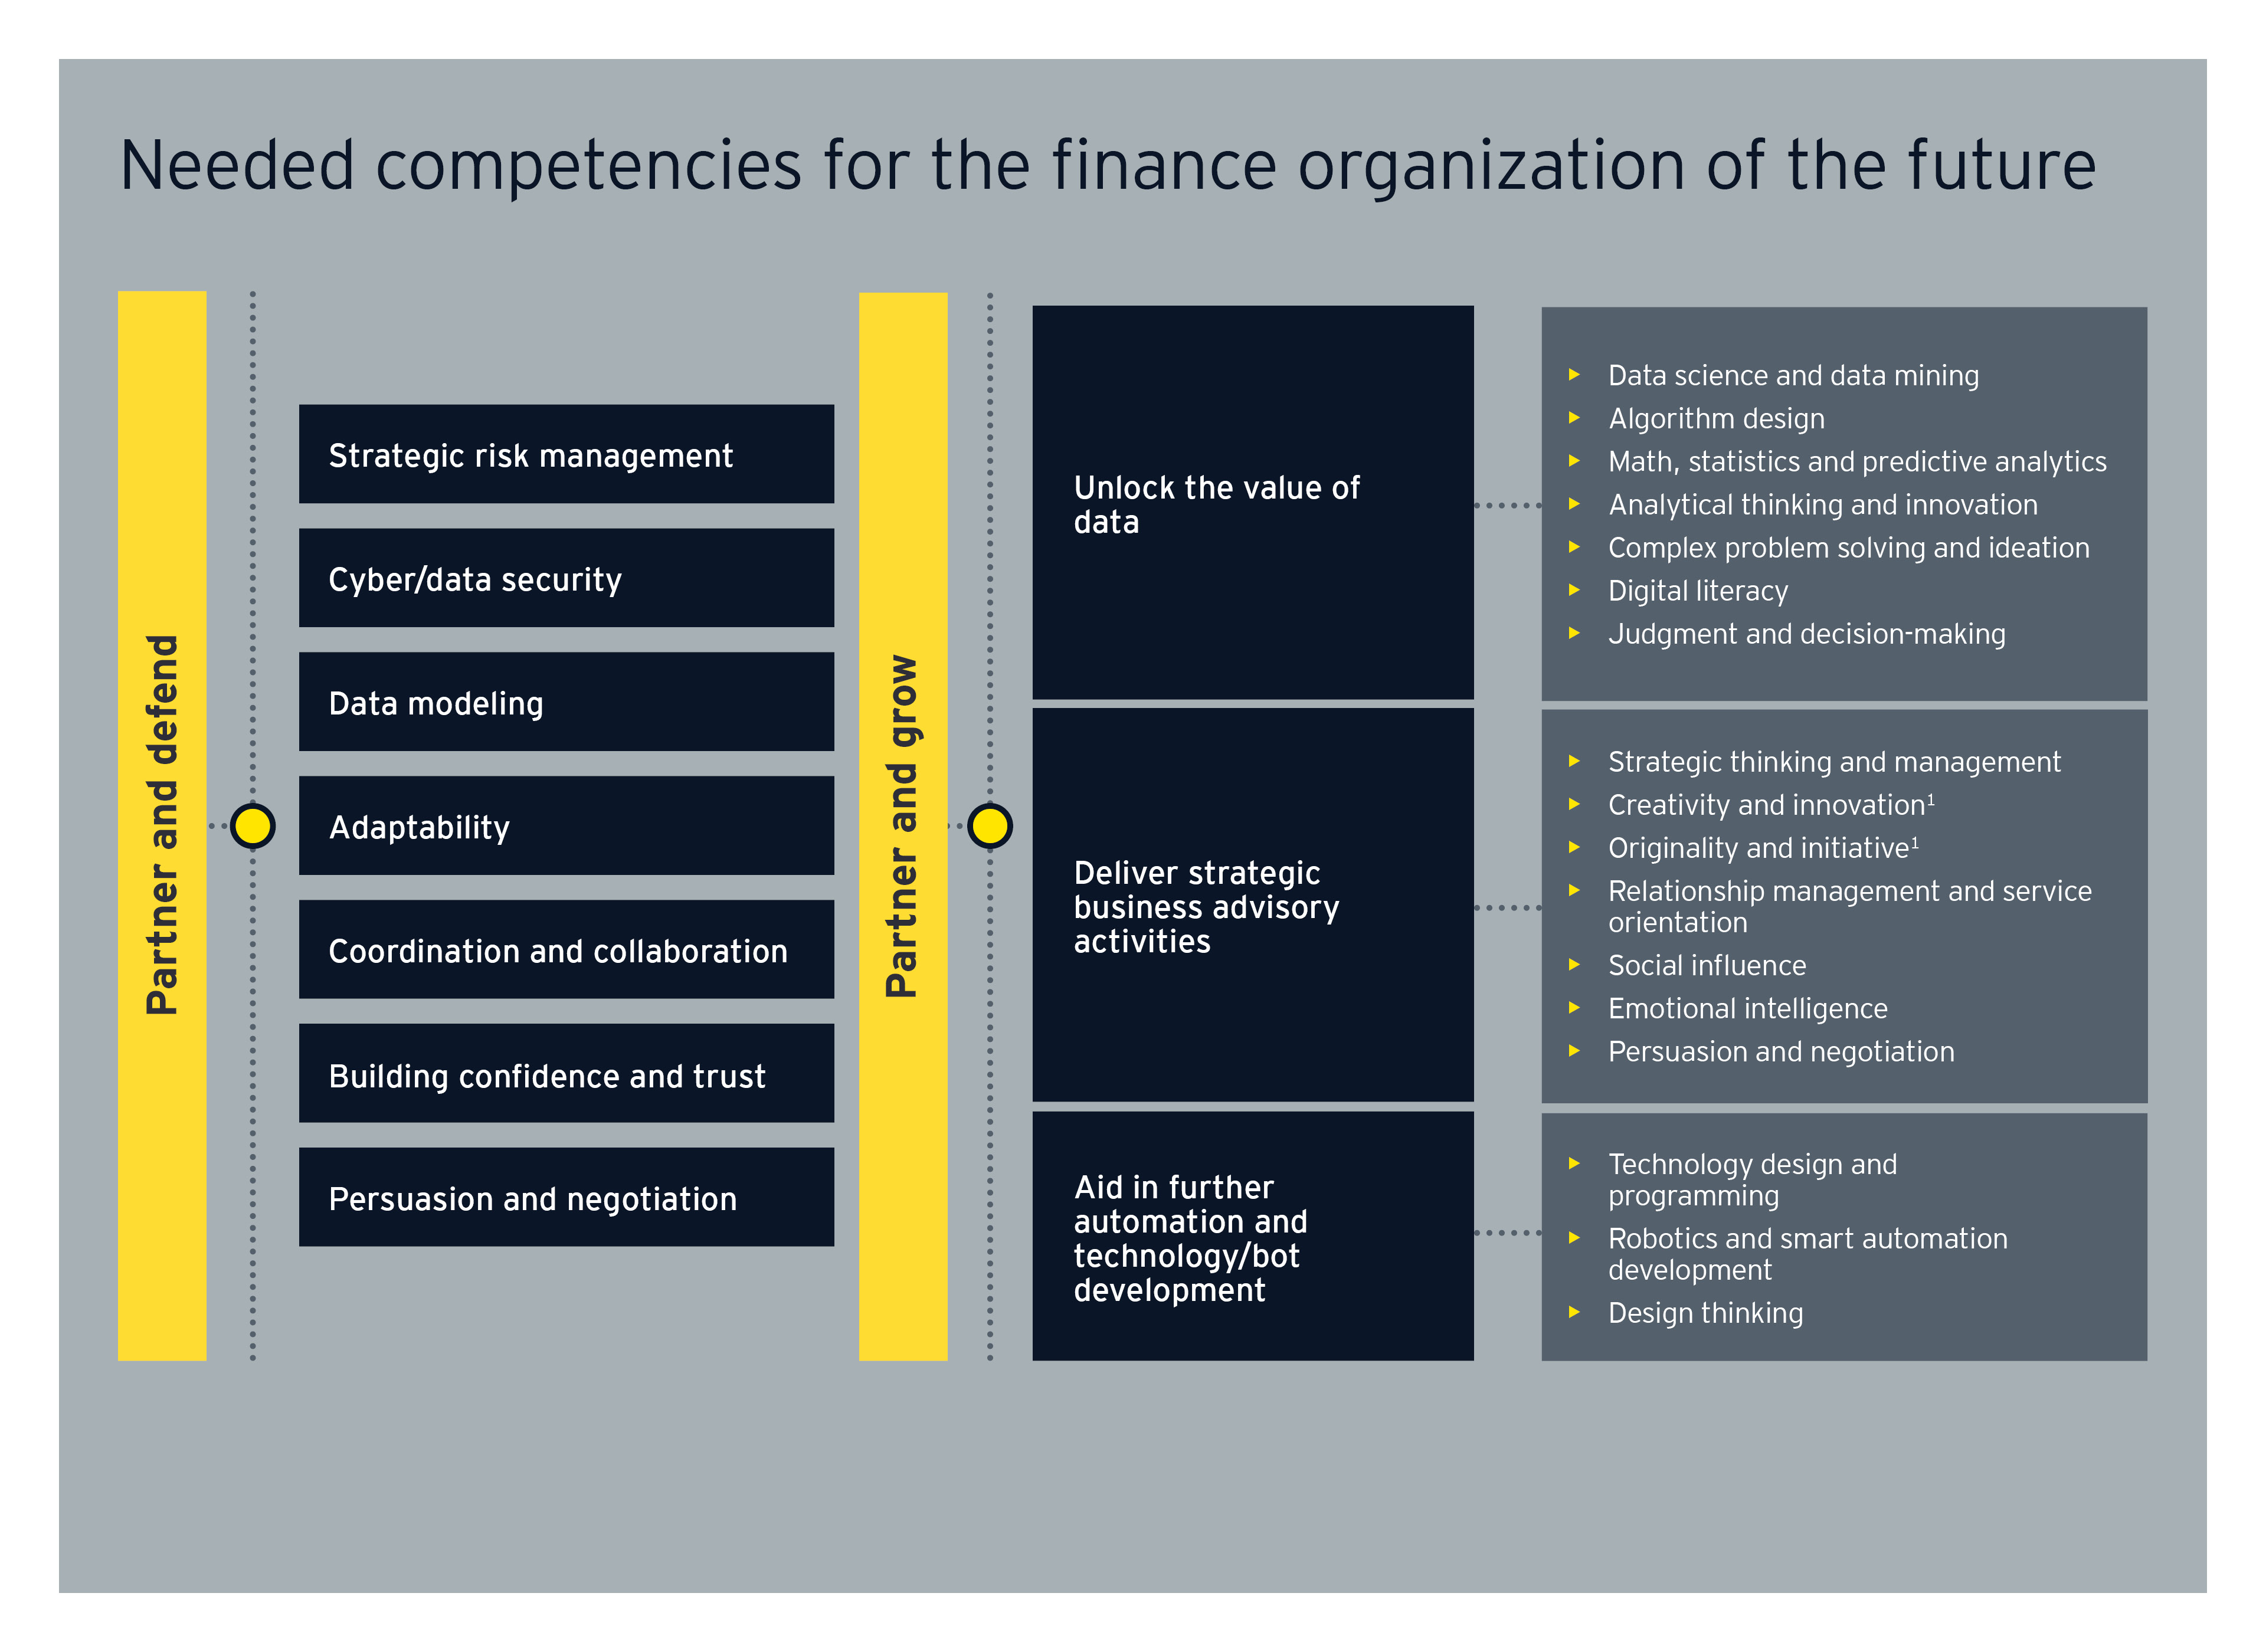 Finance organization of the future